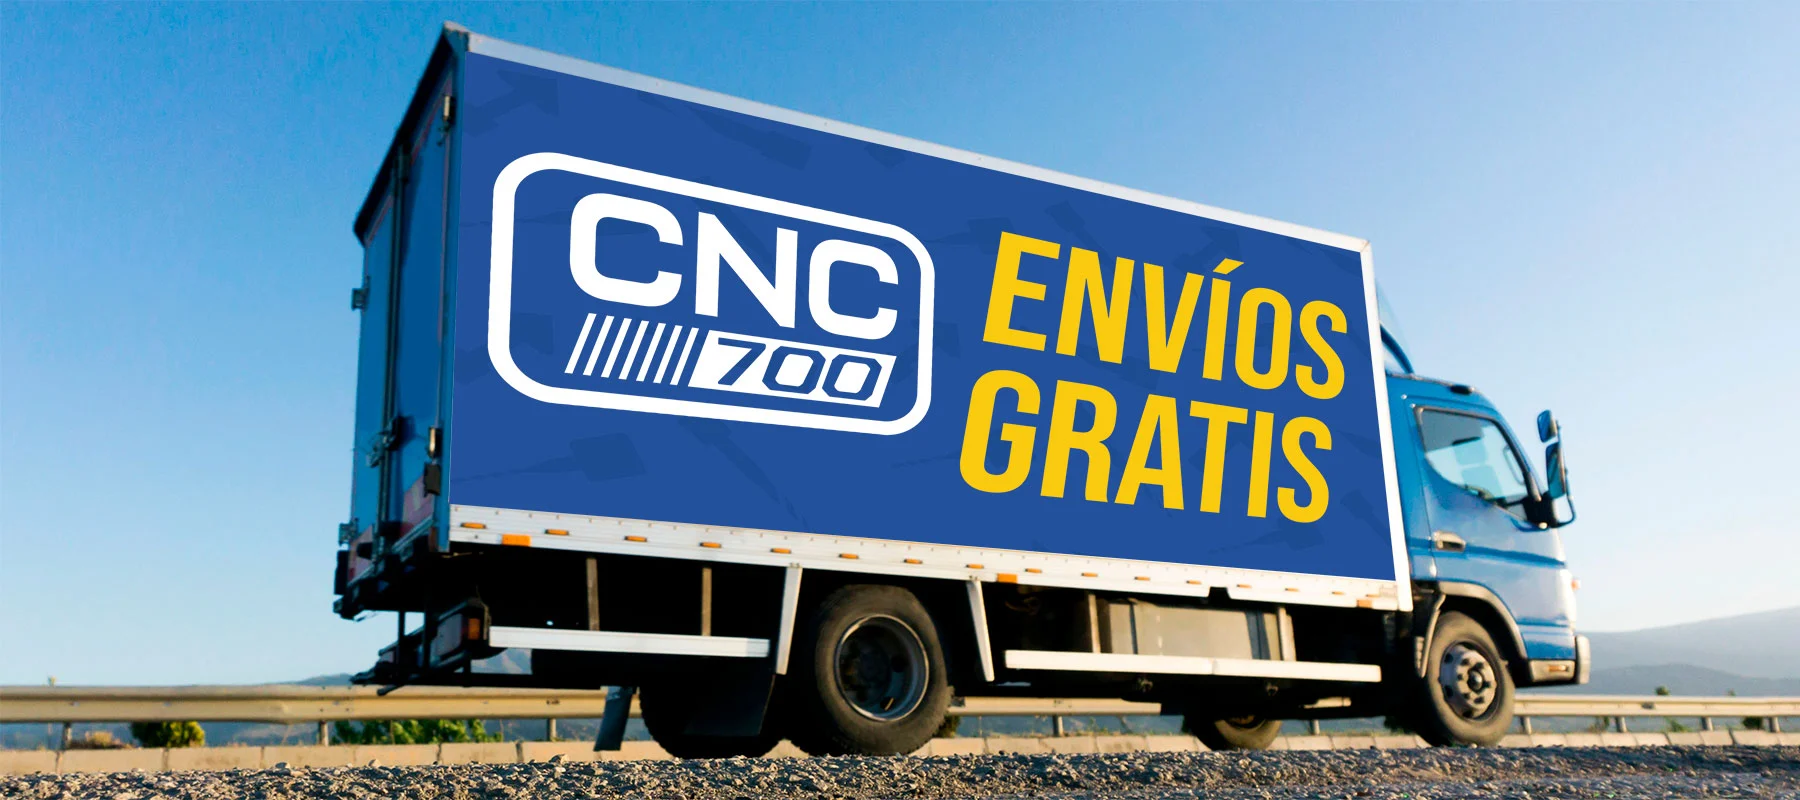 Evnios gratuitos a todo México - CNC 700